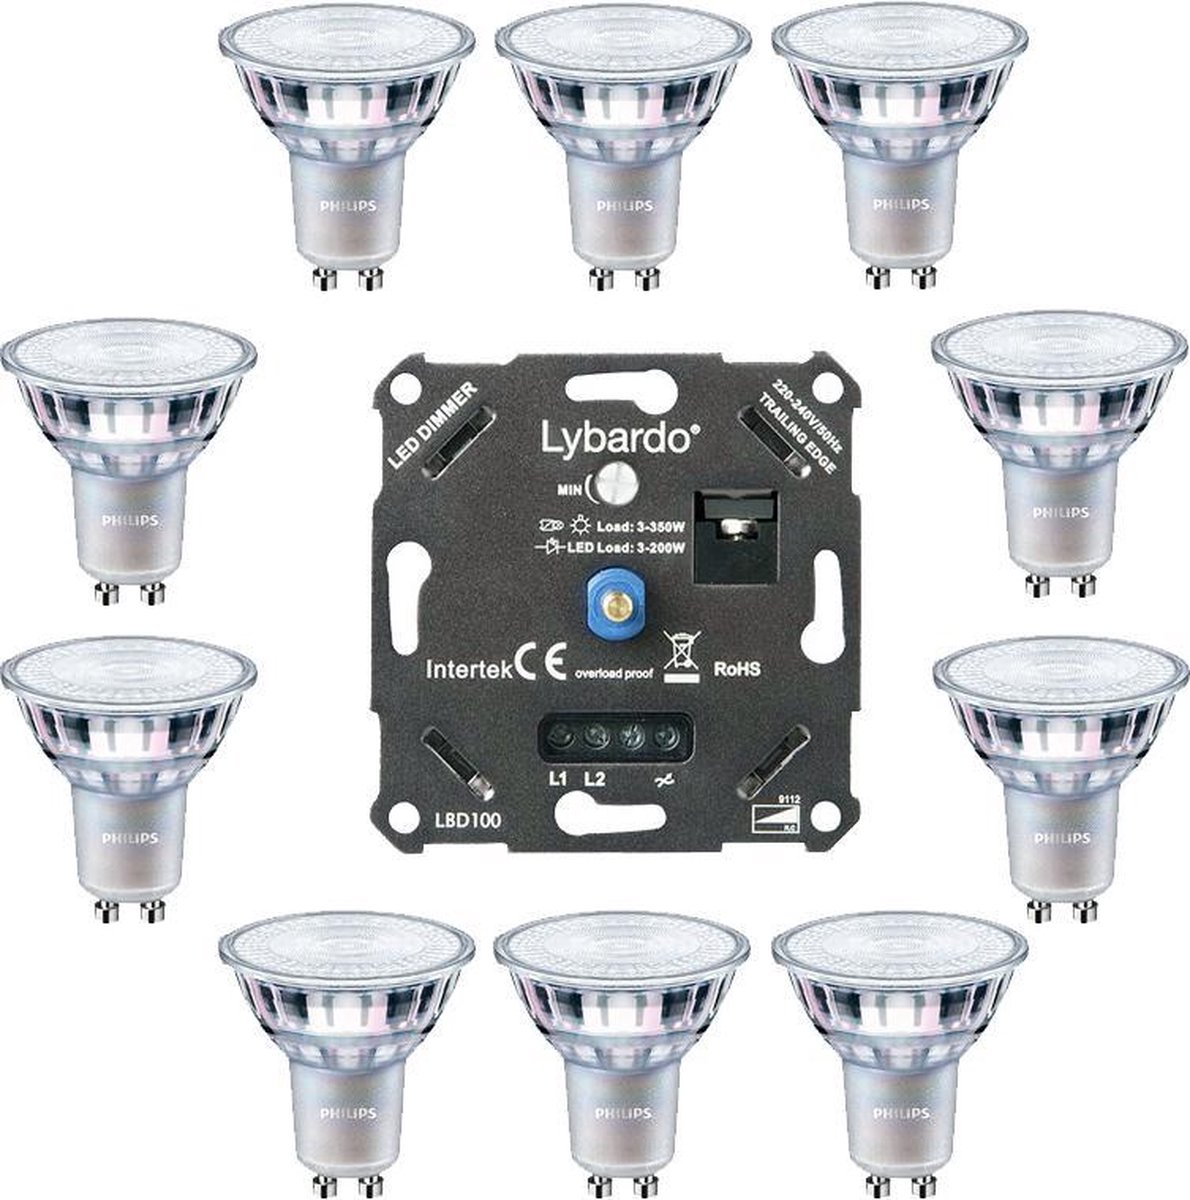 Begrijpen shit Het apparaat Philips GU10 LED lamp - 10-pack - 4W - Dimbaar - Warm wit licht + LED dimmer  0-175W | bol.com